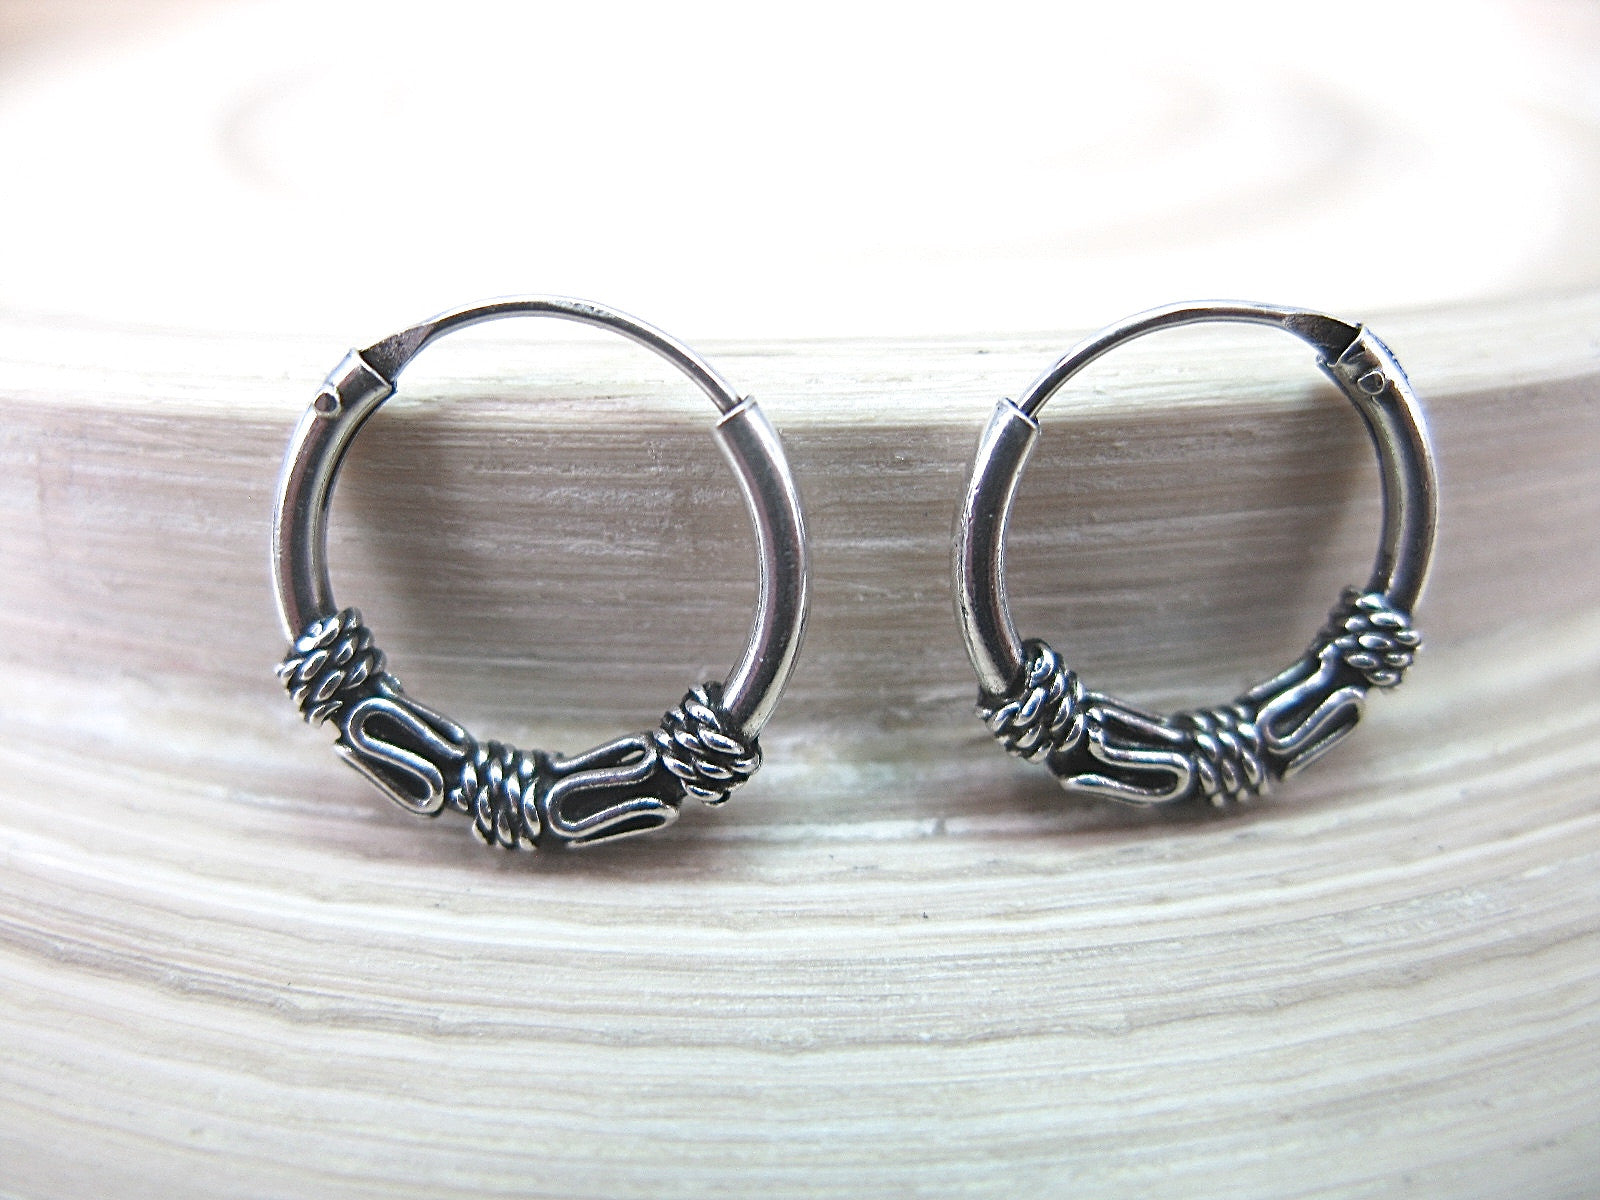 14mm Balinese Hoop Earrings in 925 Sterling Silver Earrings - Faith Owl